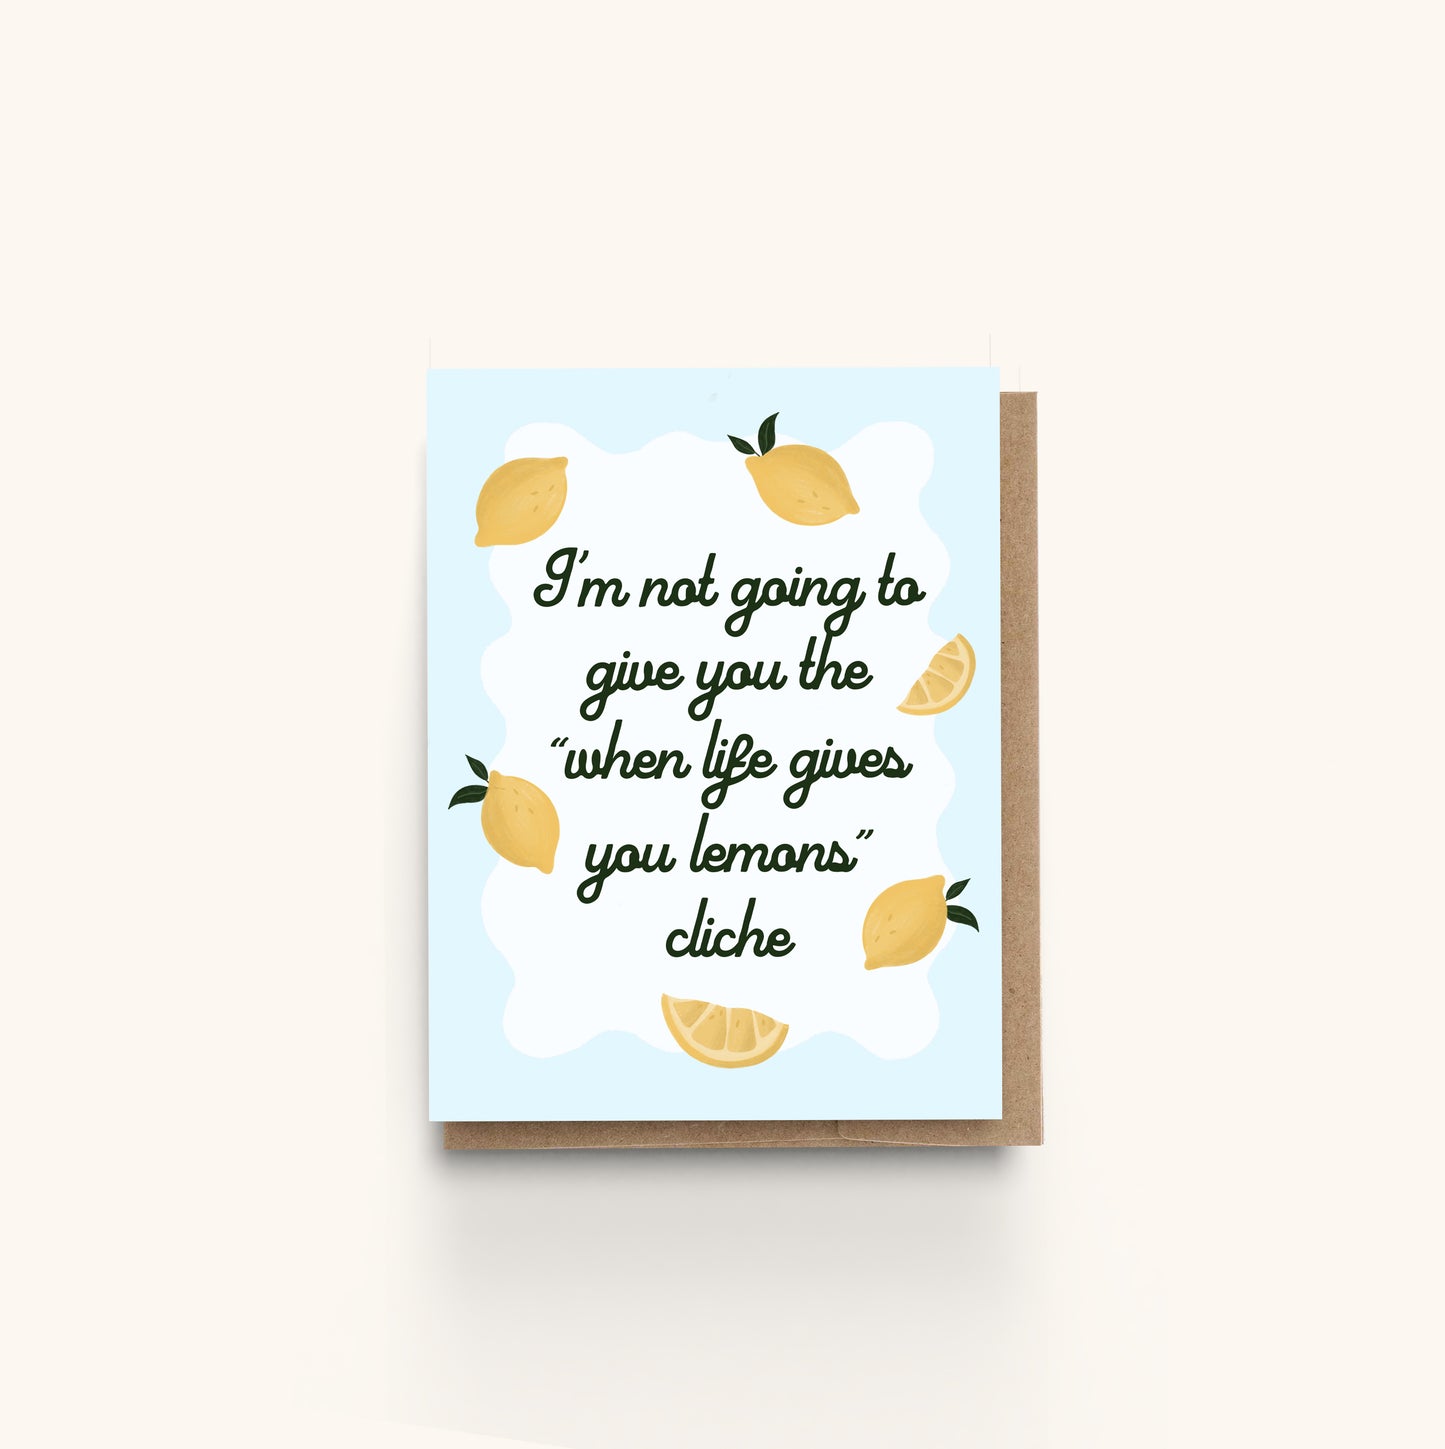 Life Gives you Lemons Sarcastic Encouragement Card